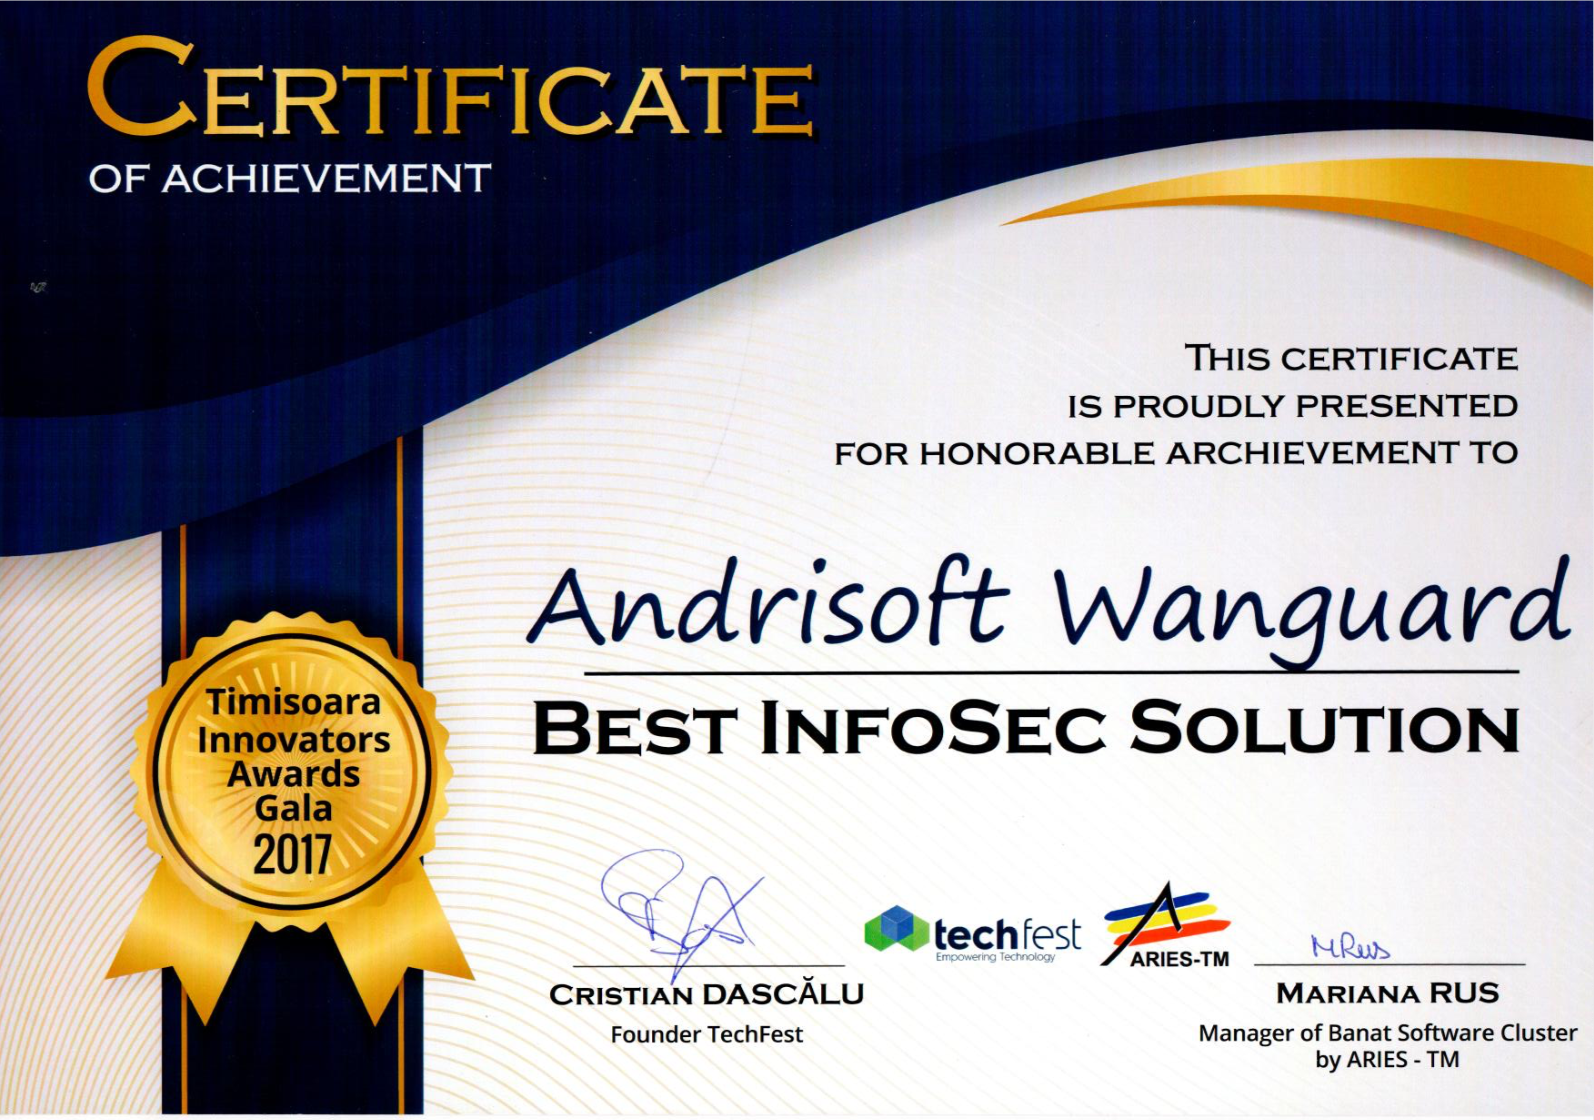 Andrisoft Wanguard won Best InfoSec Solution award!